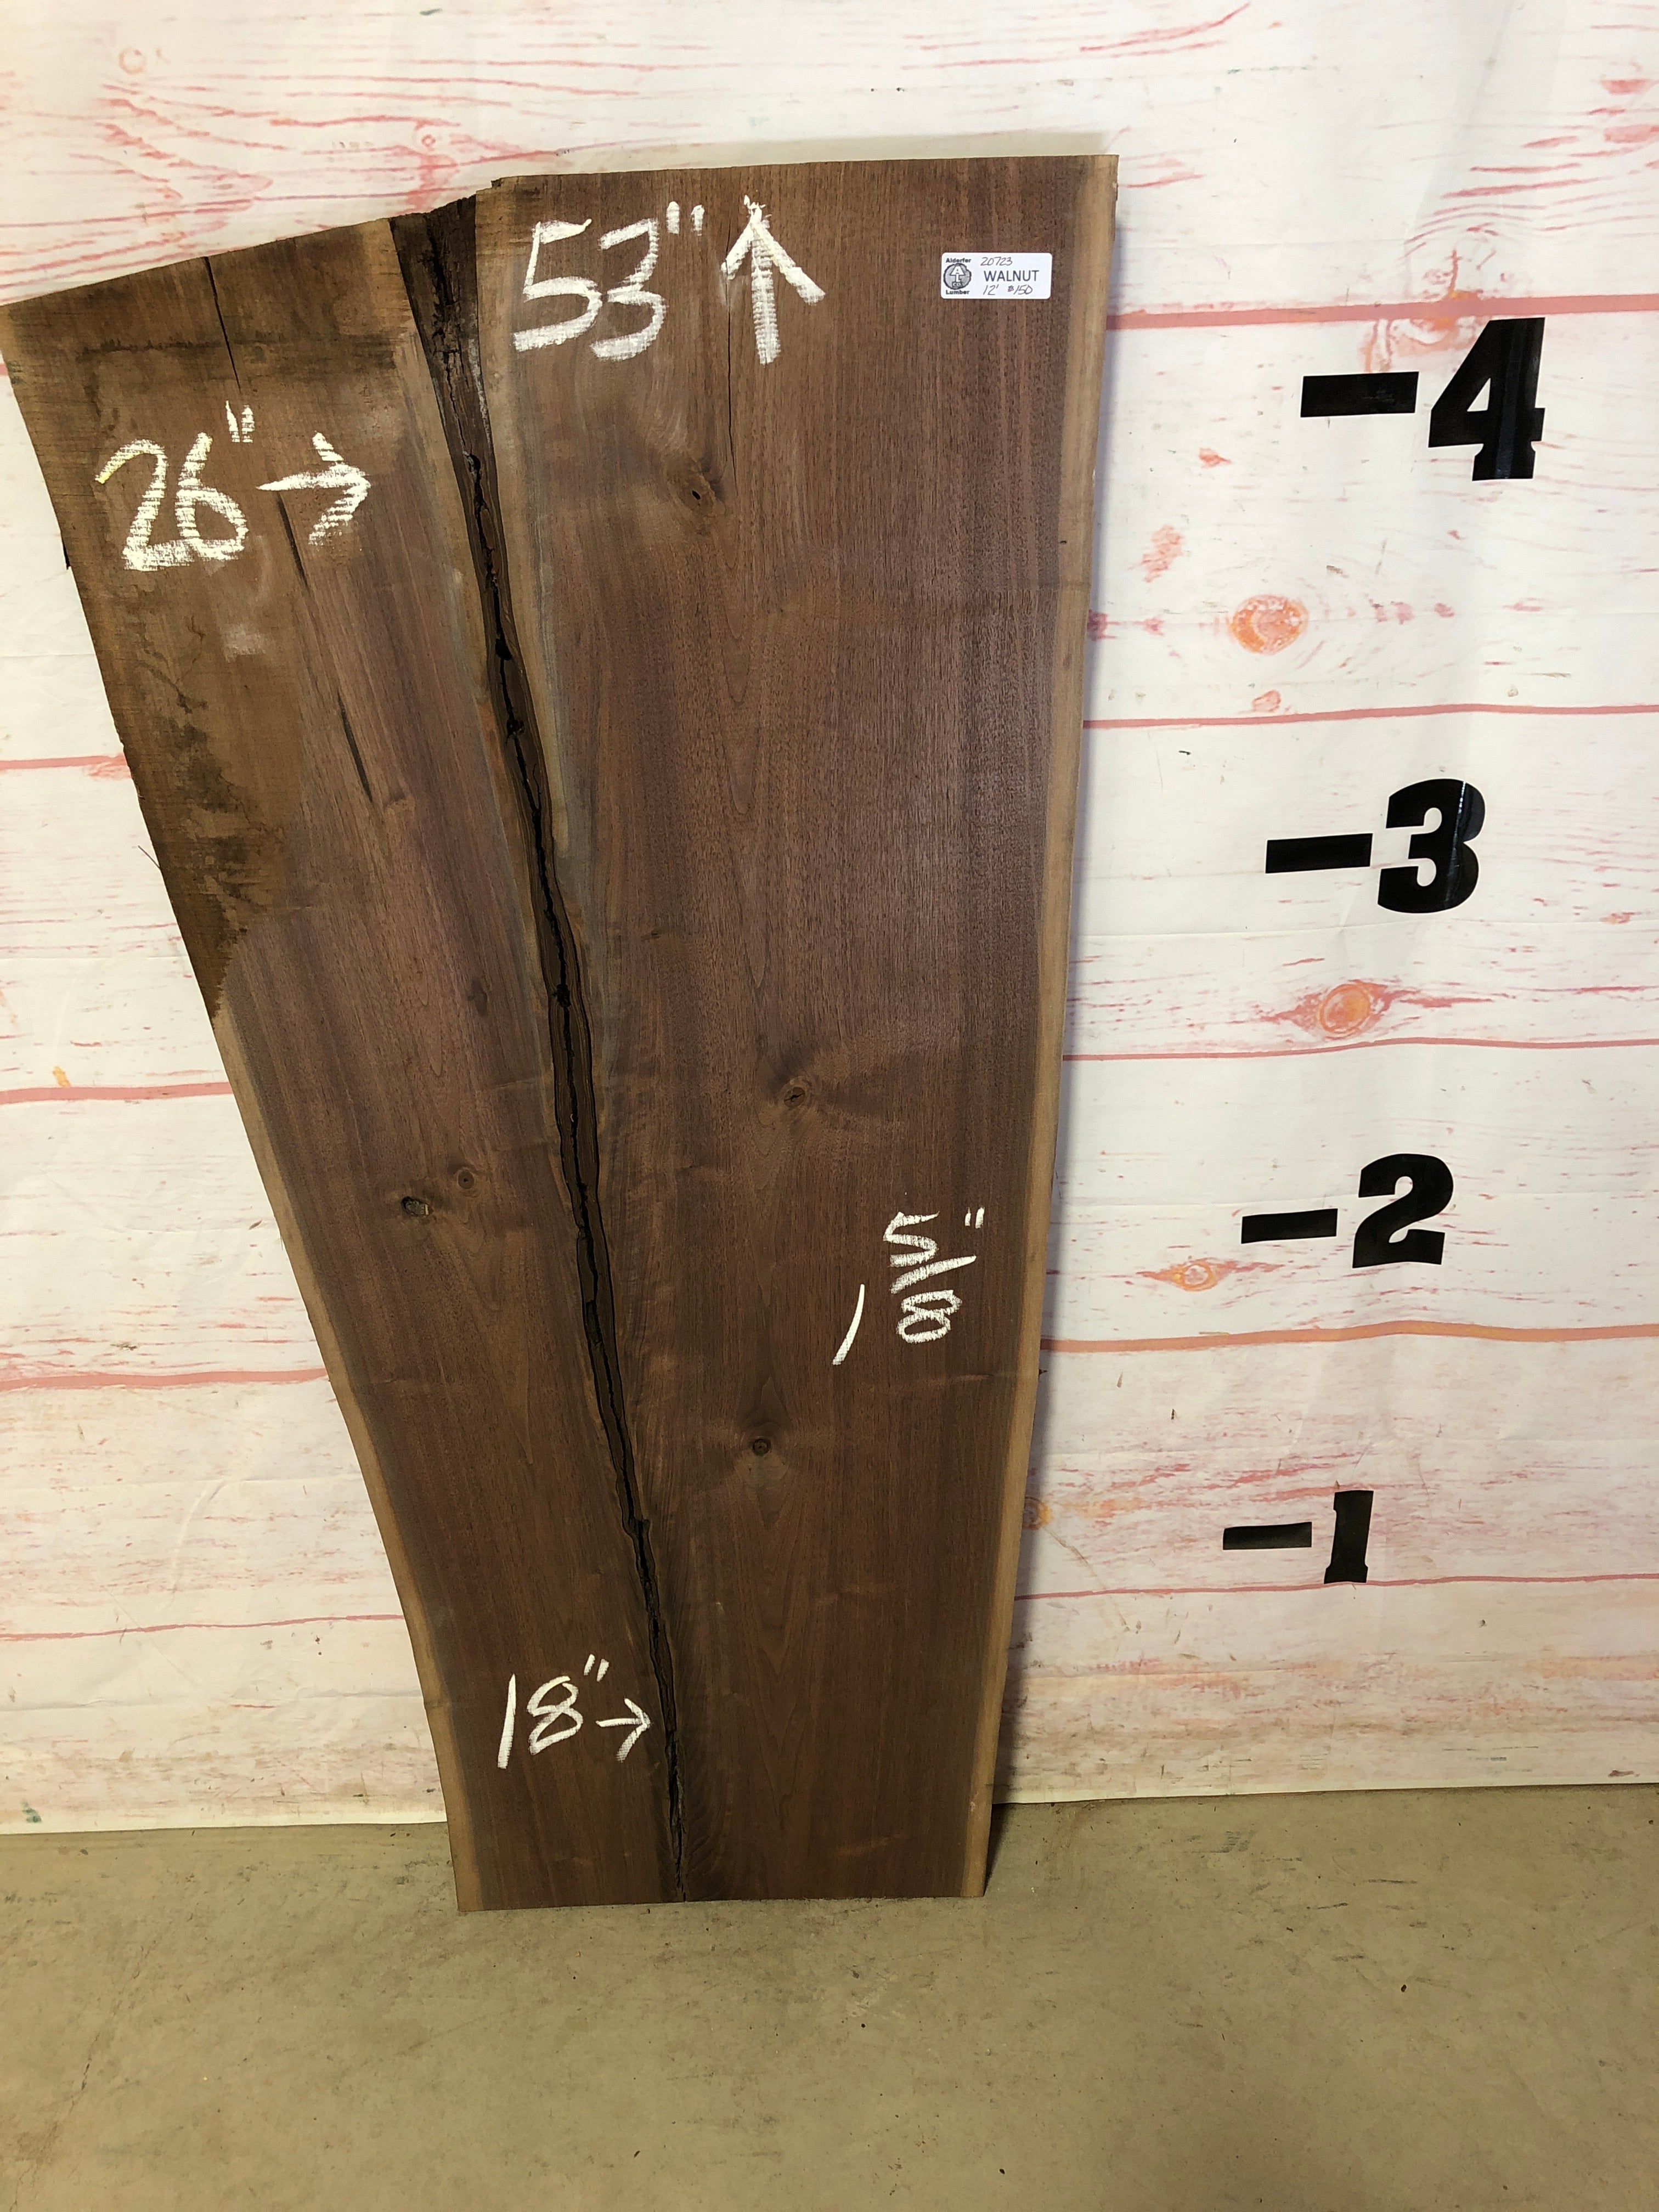 Black Walnut Lumber, Walnut Wood and Boards For Sale, Walnut Planks -  Alderfer Lumber Co.